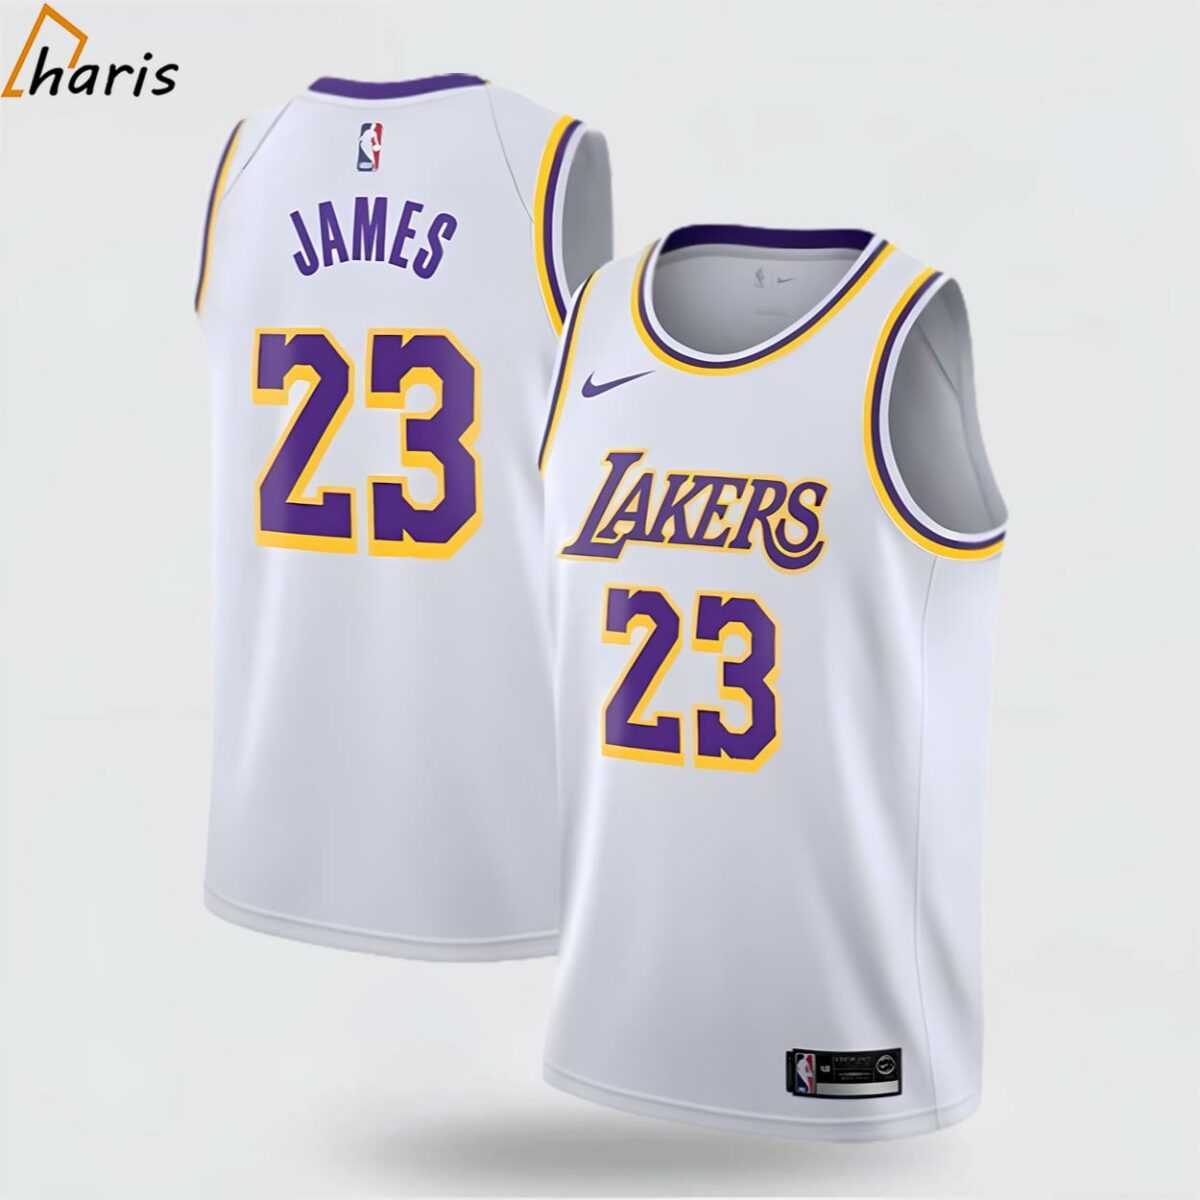 Los Angeles Lakers LeBron James Nike Association Edition Swingman Jersey 1 jersey